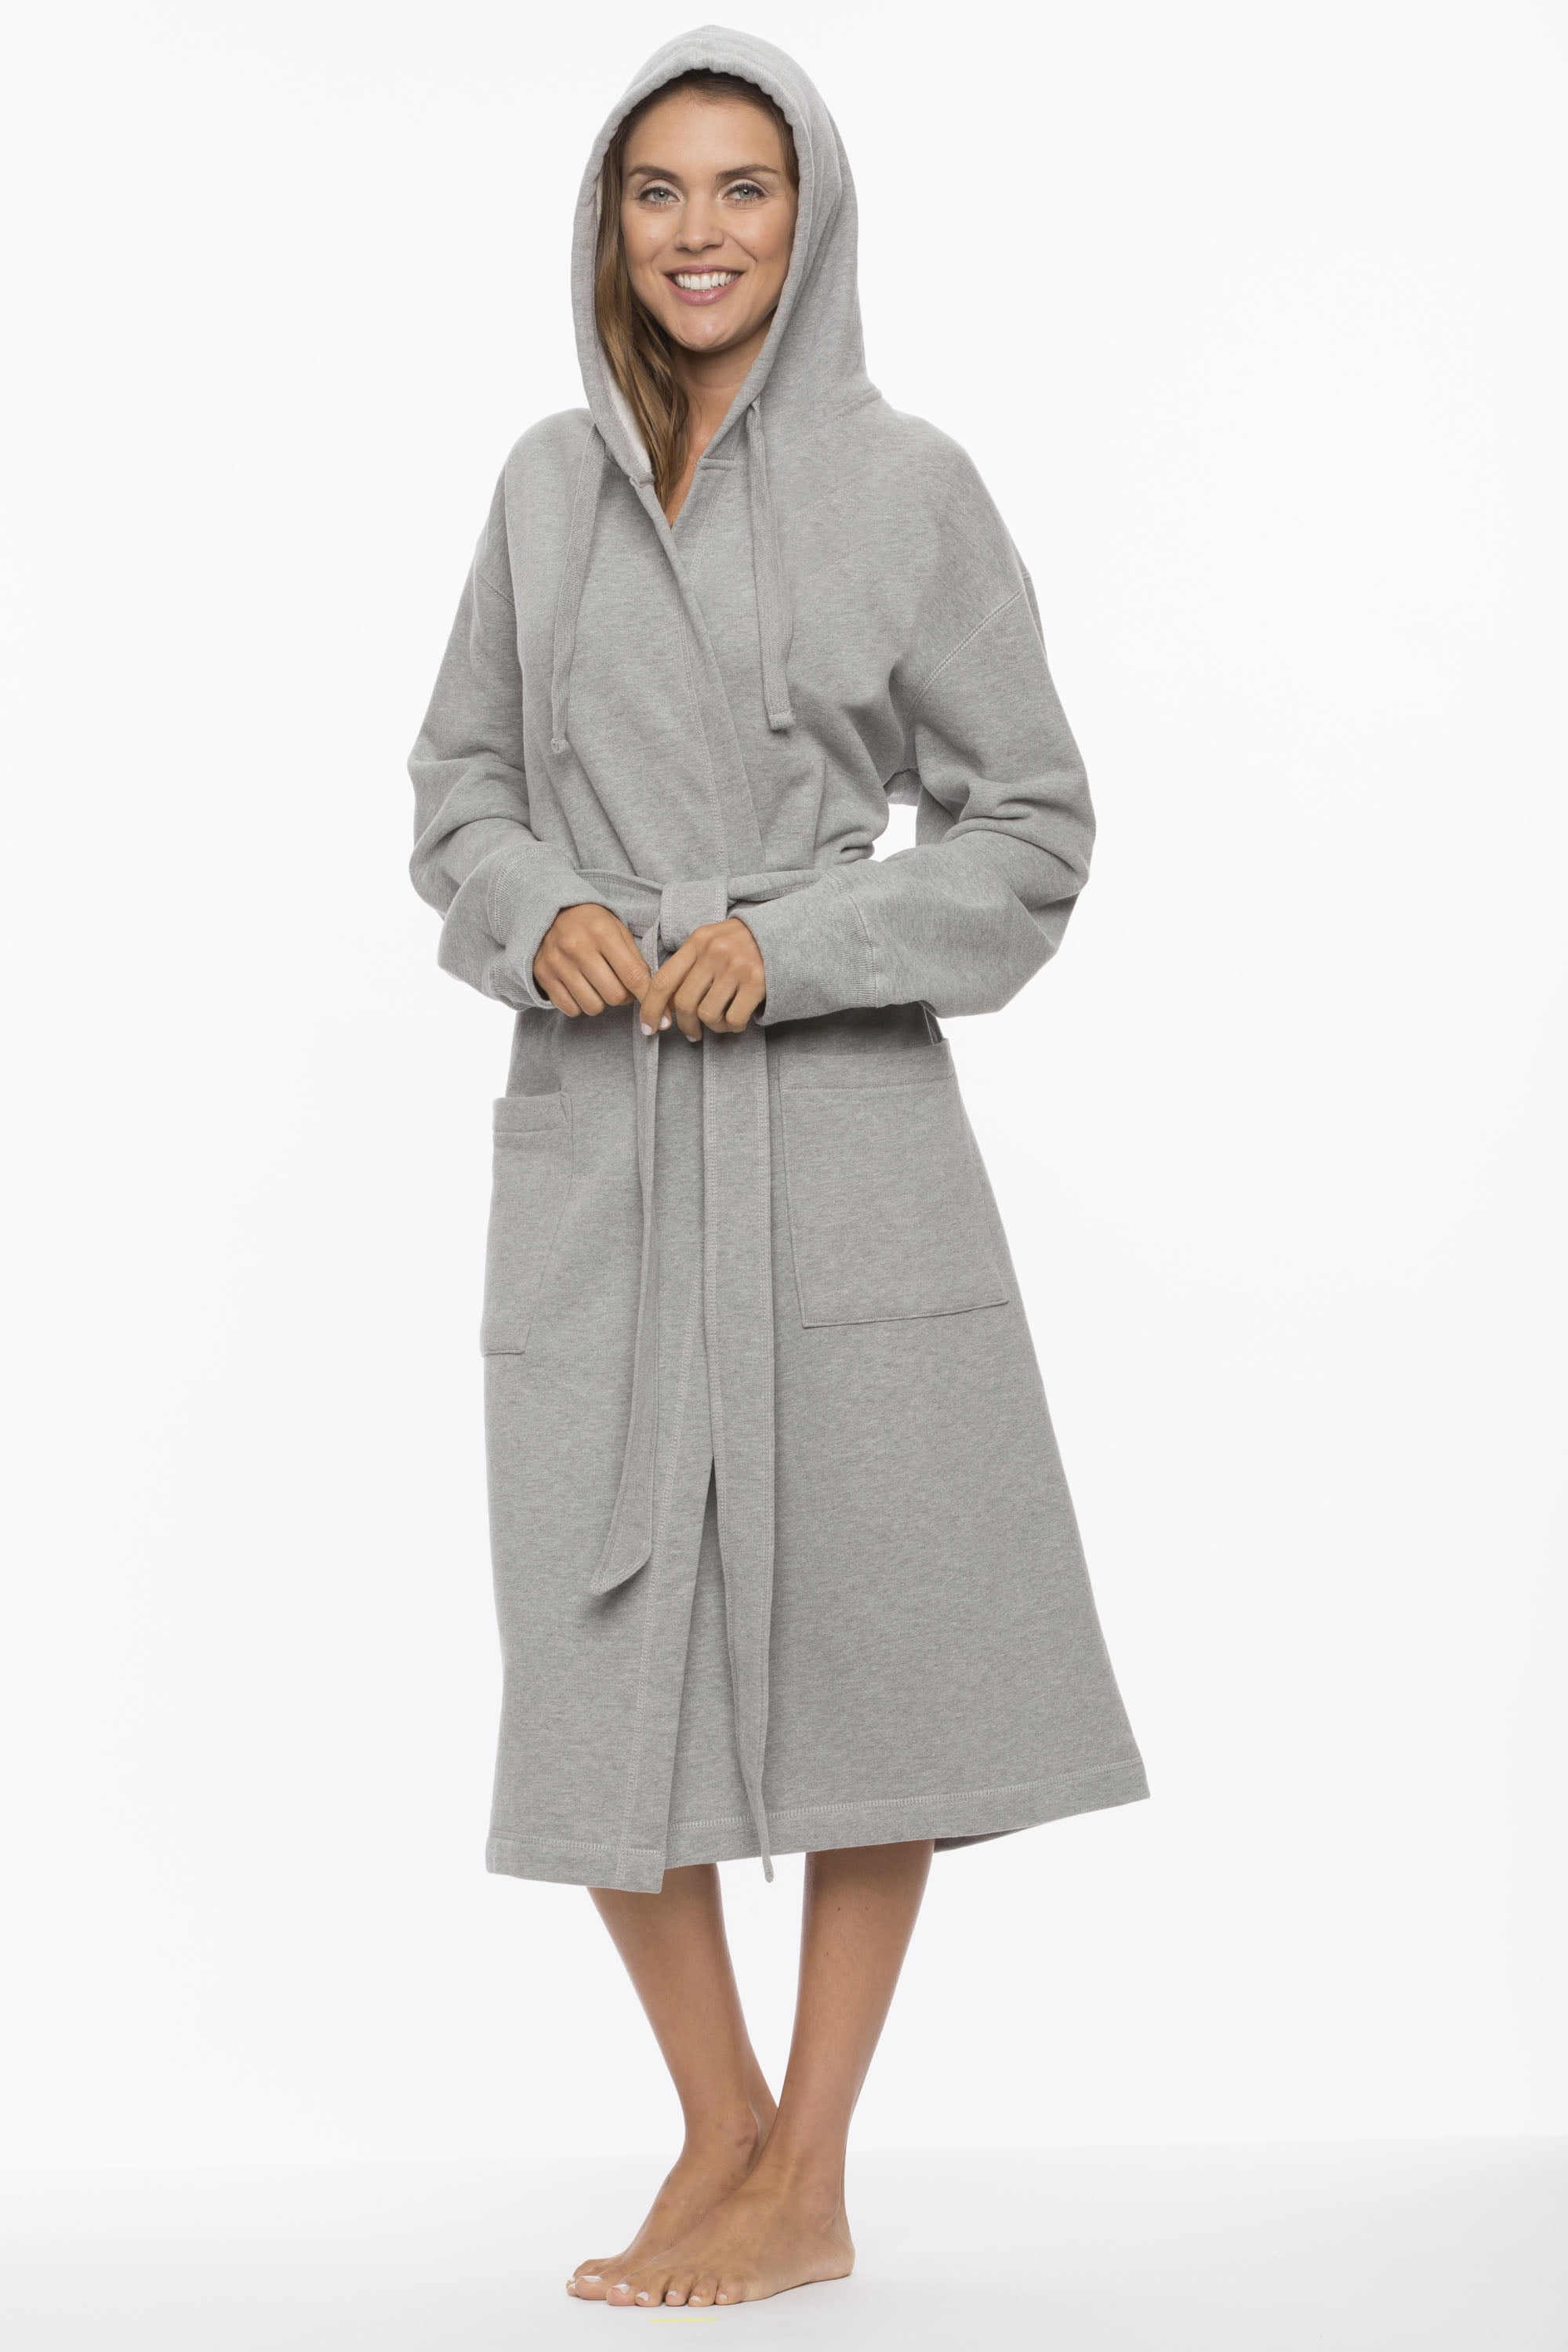 Unisex Hooded Bathrobe Sweatshirt Robe for Unisex Adult, Men and Women Gray  One Size